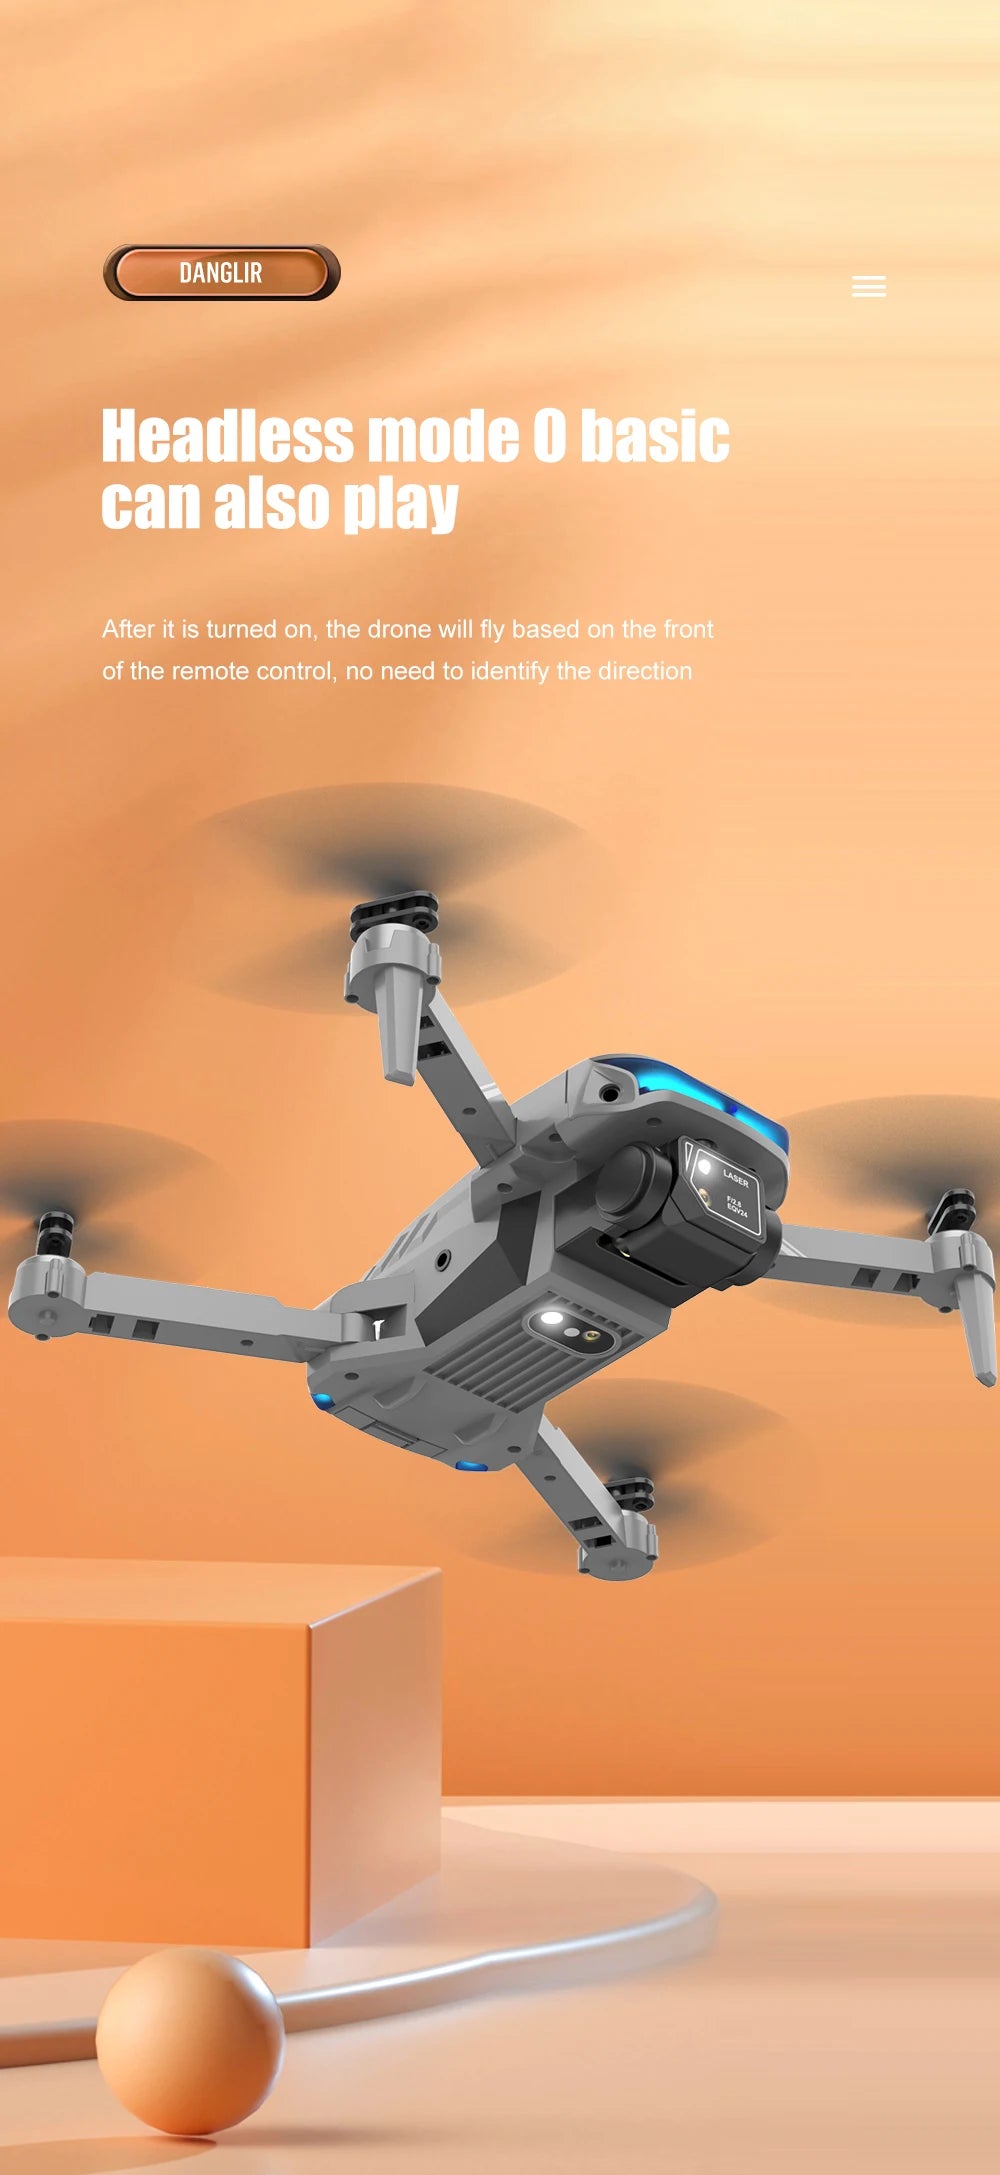 XT9 Mini Drone, danglir headless mode 0 basic can als0 play